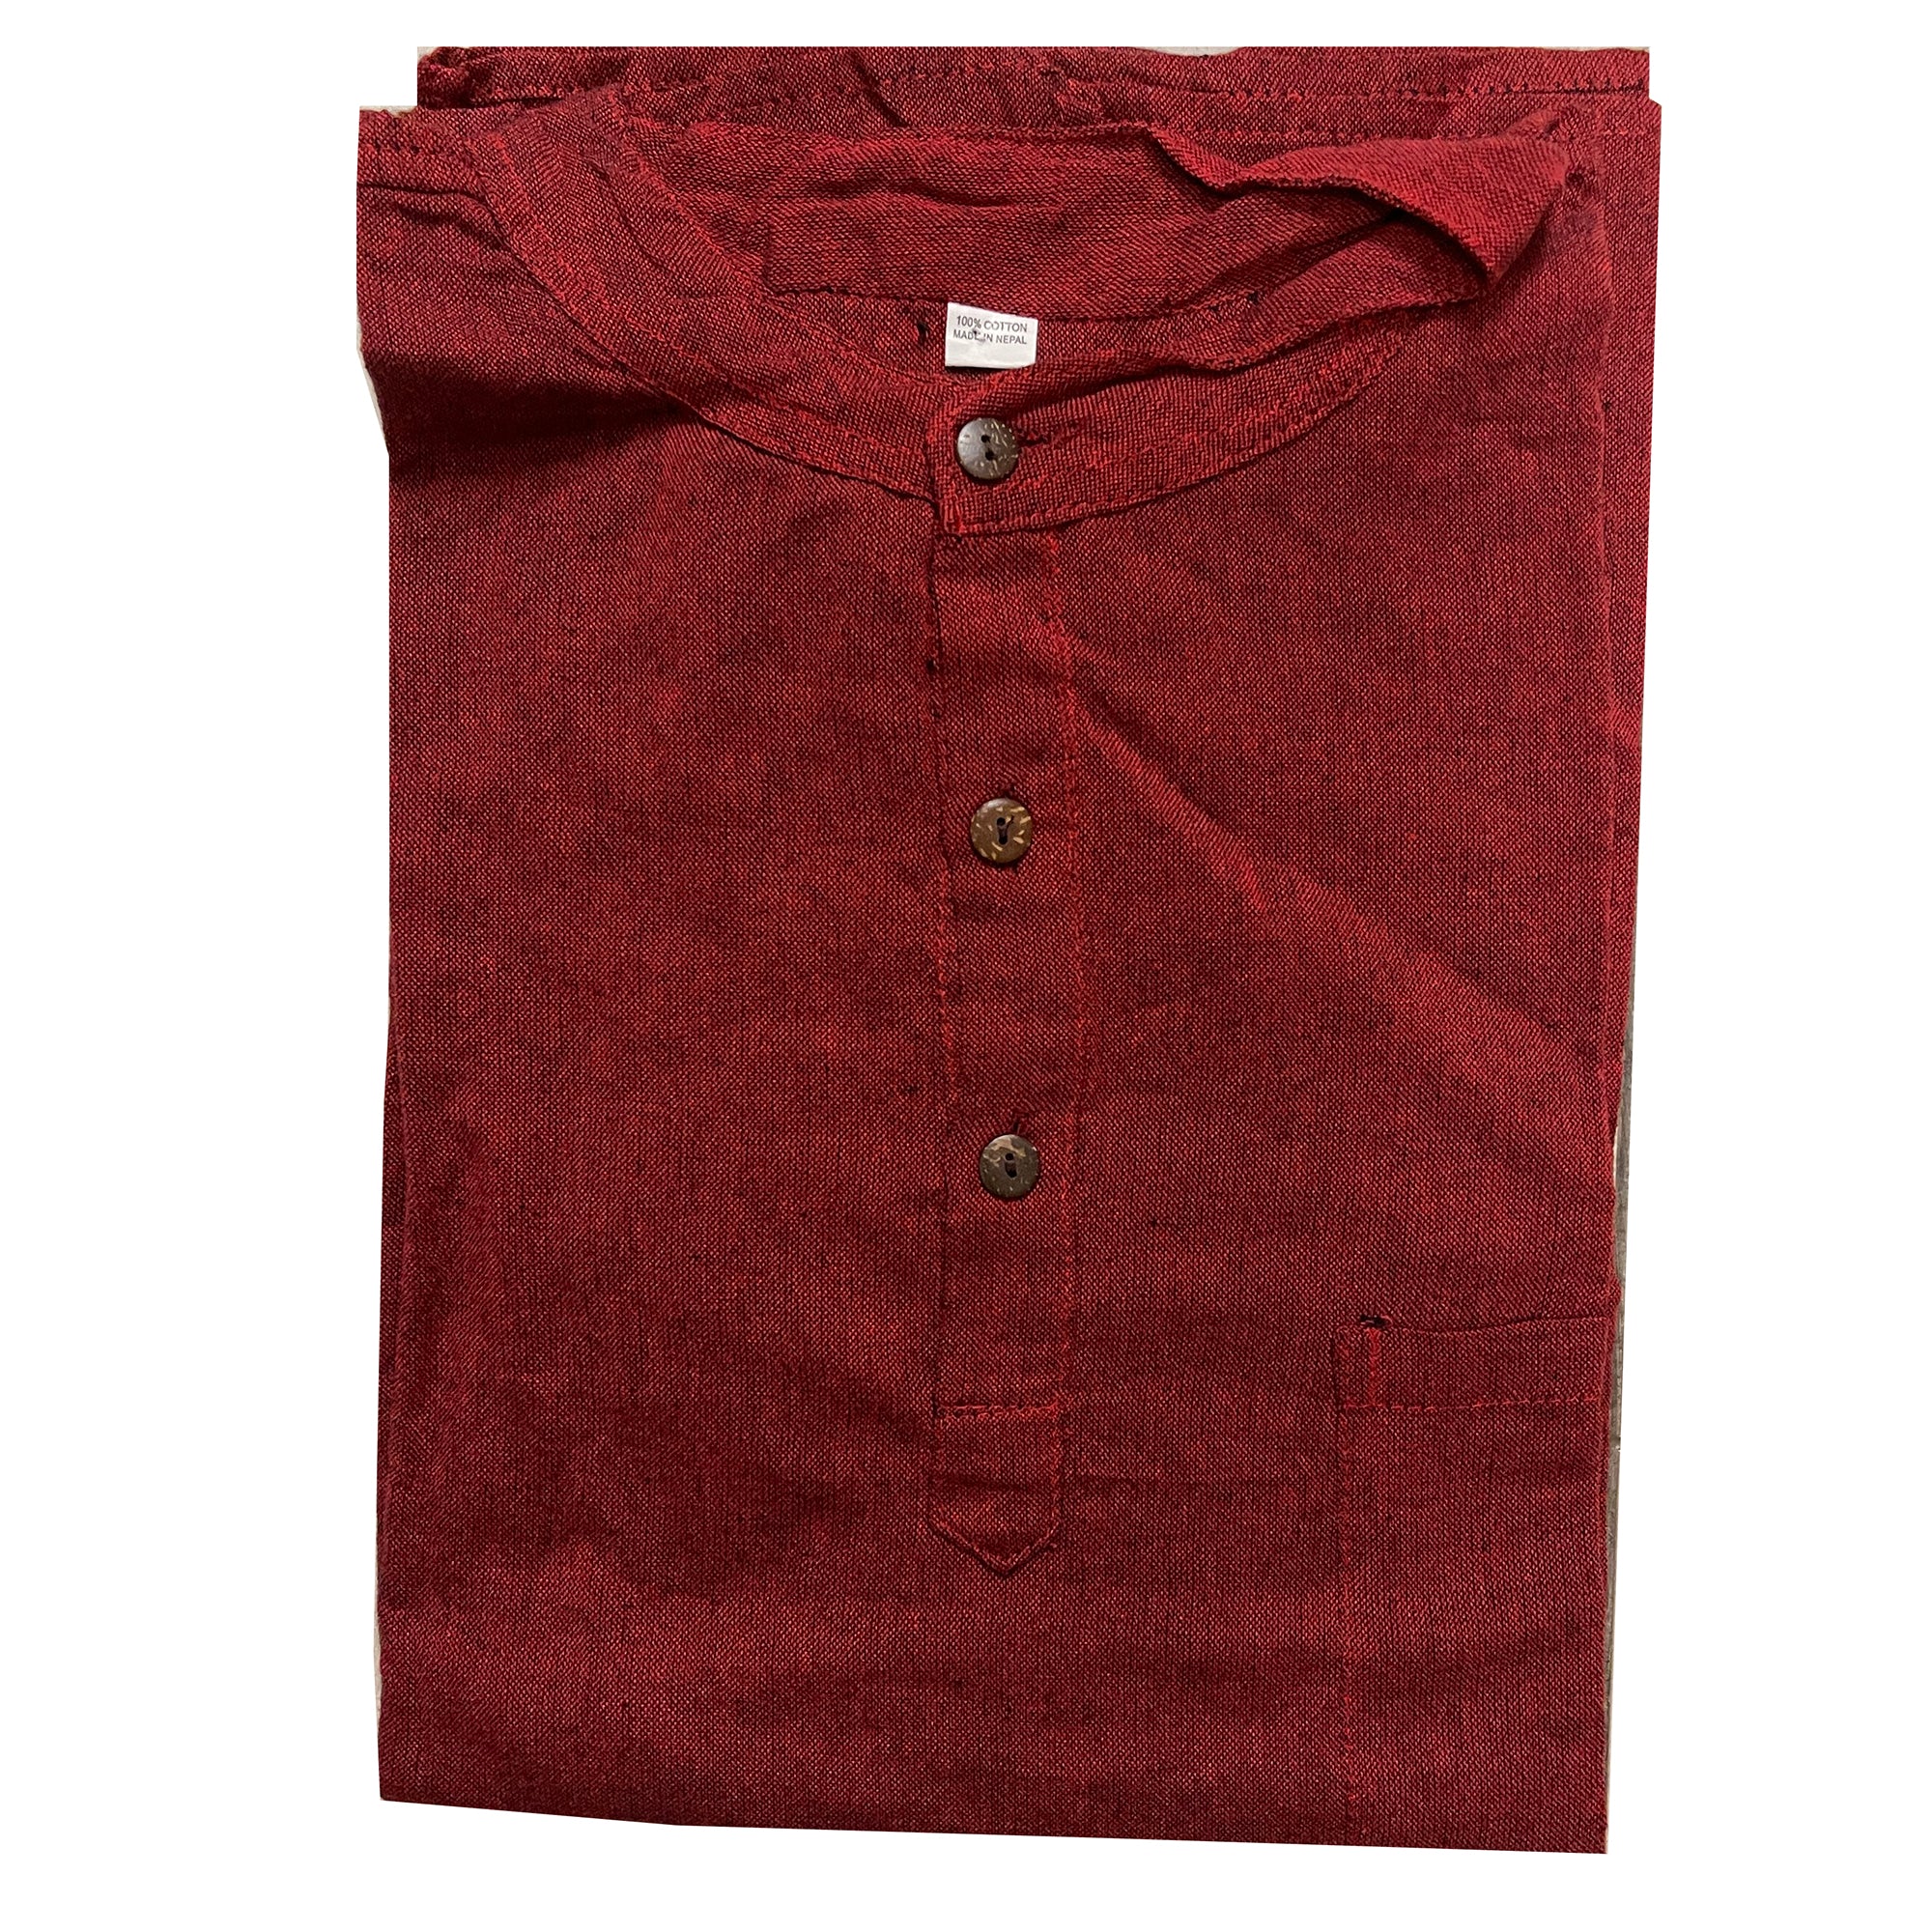 Thin Nepali cotton shirt-10 Colors - Vintage India NYC